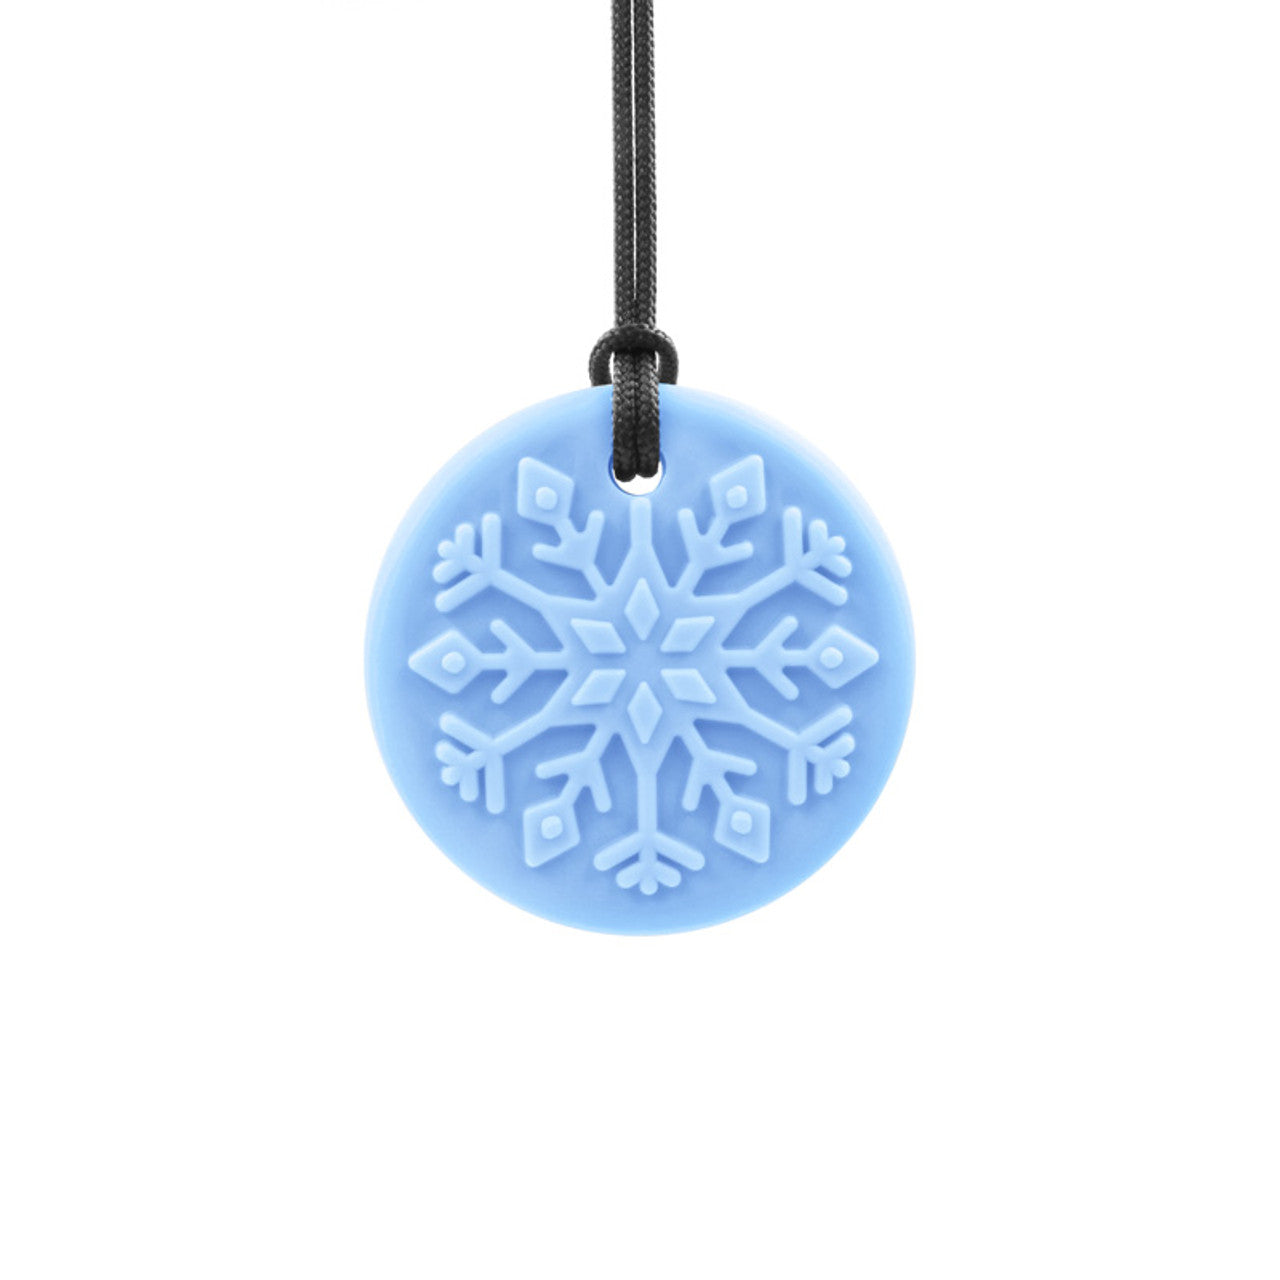 ARK_s_Blizzard_Bite_Chewable_Snowflake_Pendant_Jewelry_light_blue